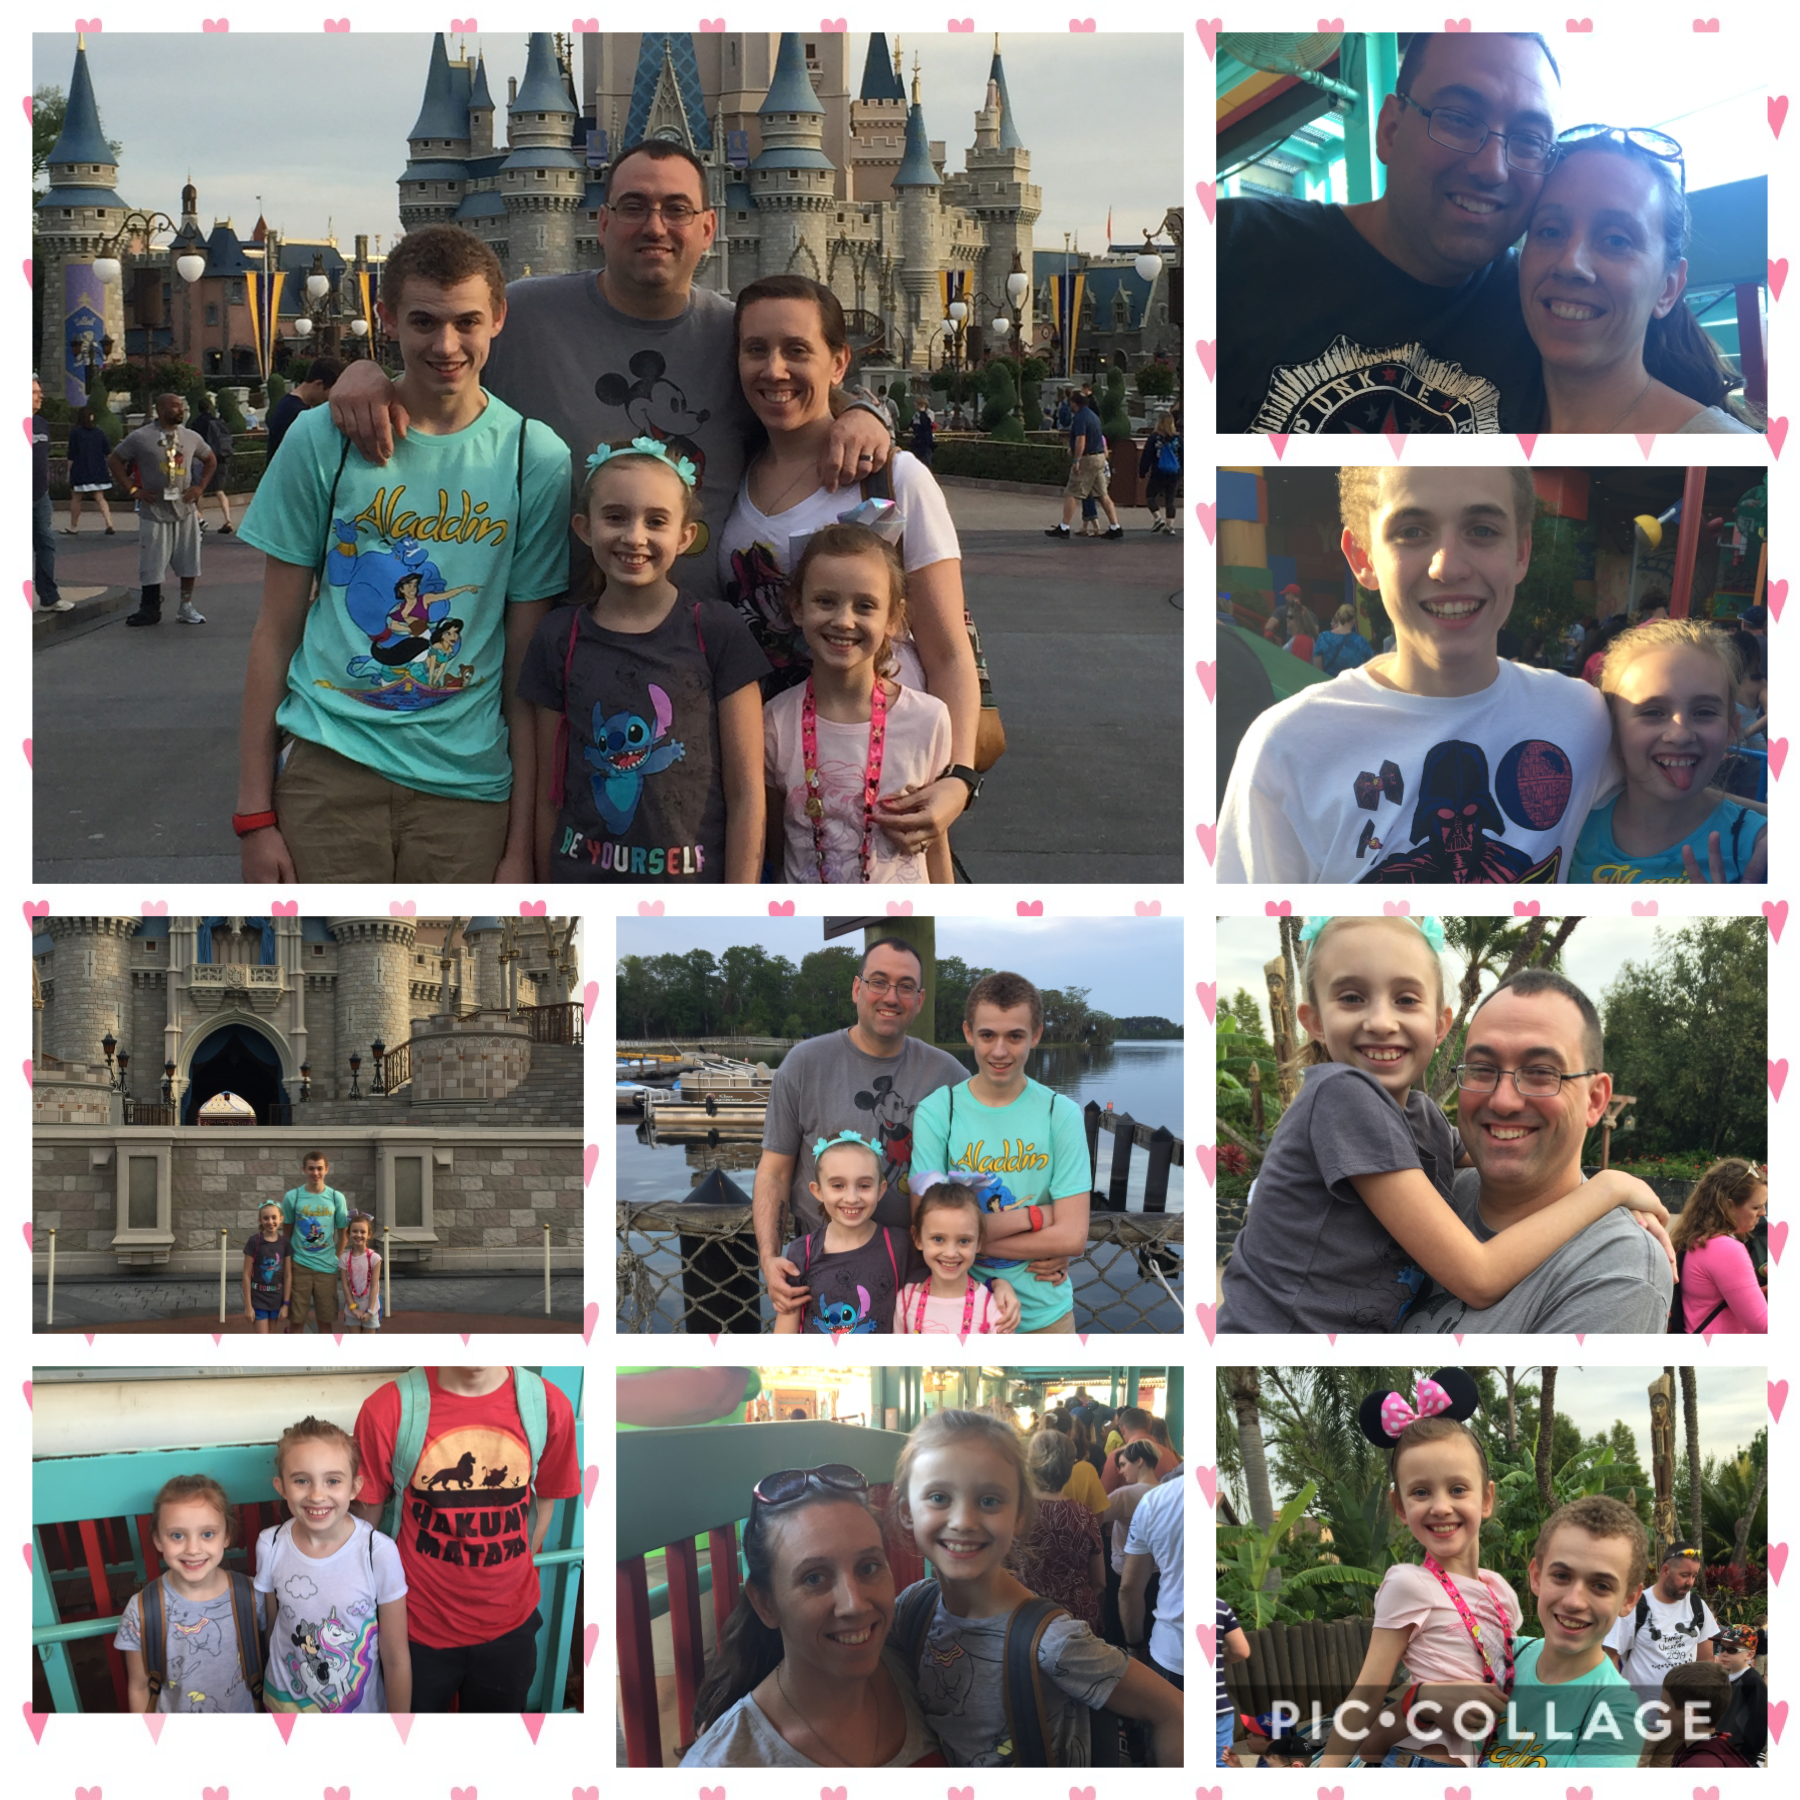 A trip to Disney World with family
#So fun